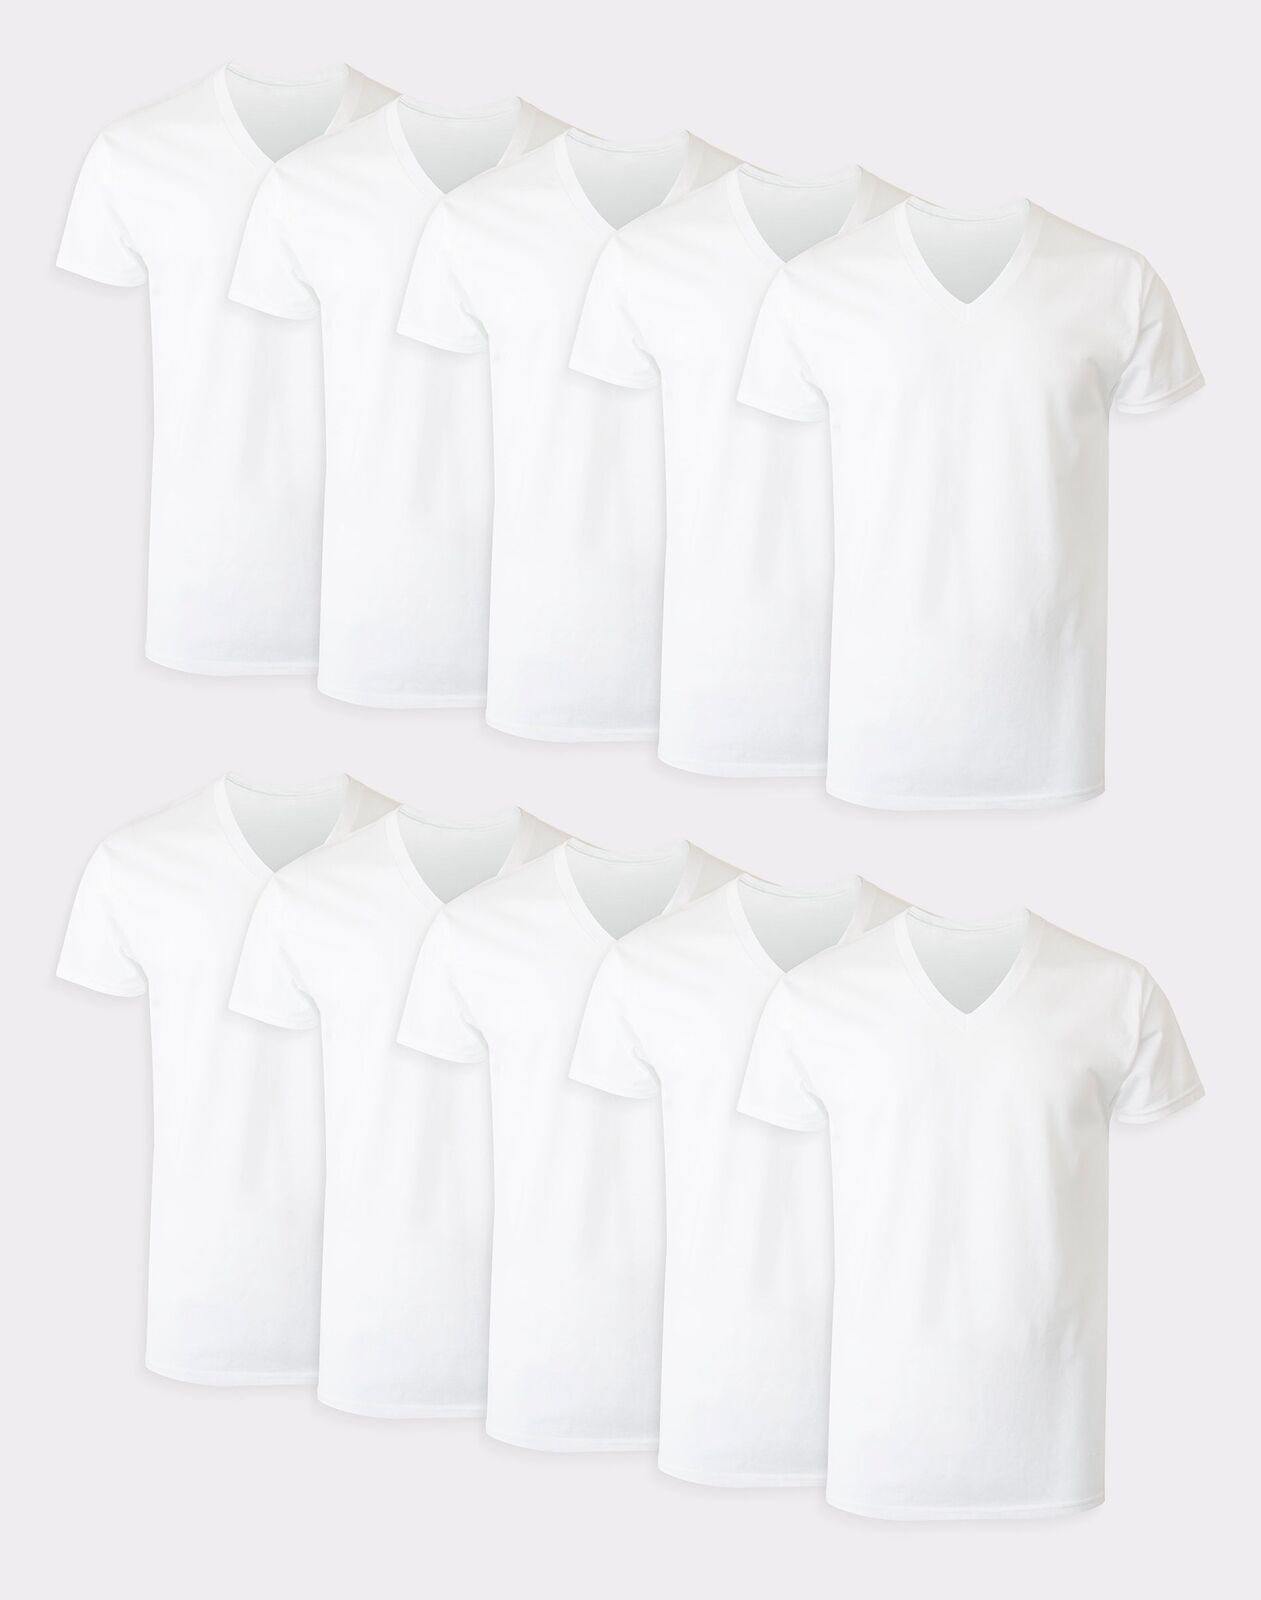 Hanes Men's Undershirt 10-Pack ComfortSoft White V-Neck T-Shirt Tee Short Sleeve